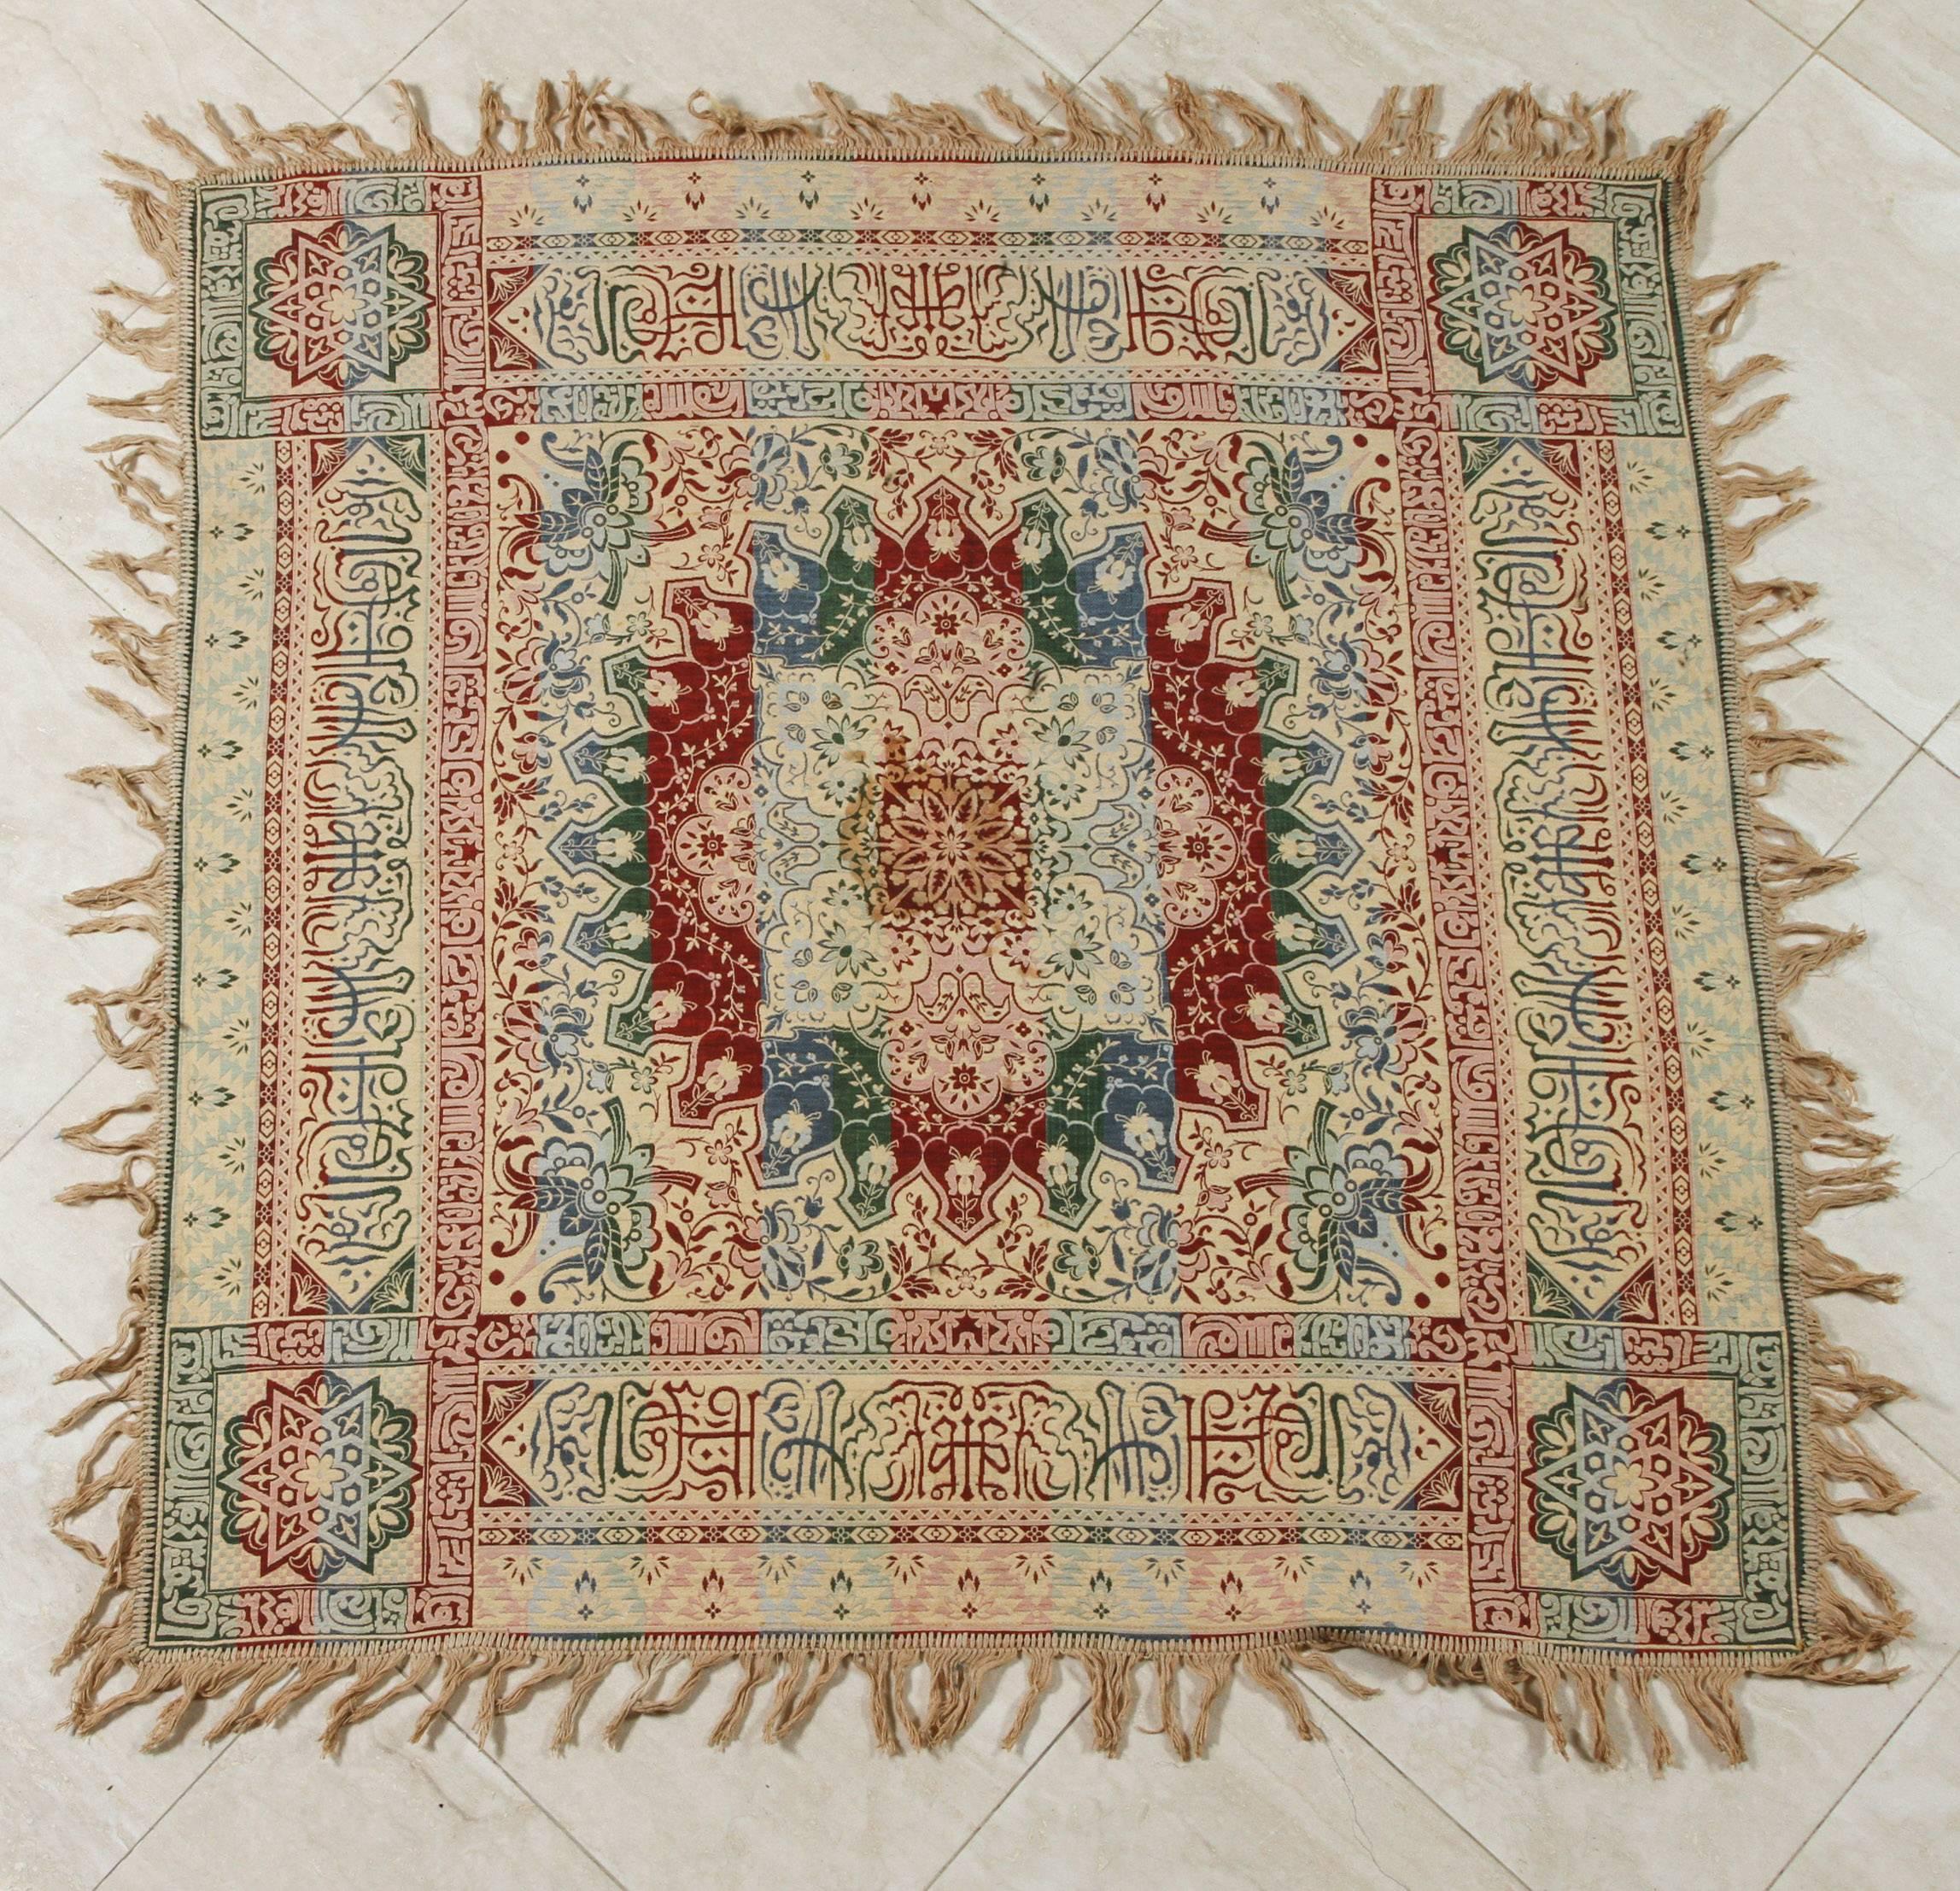 Silk Granada Islamic Spain Moorish Textile with Arabic Calligraphy Writing